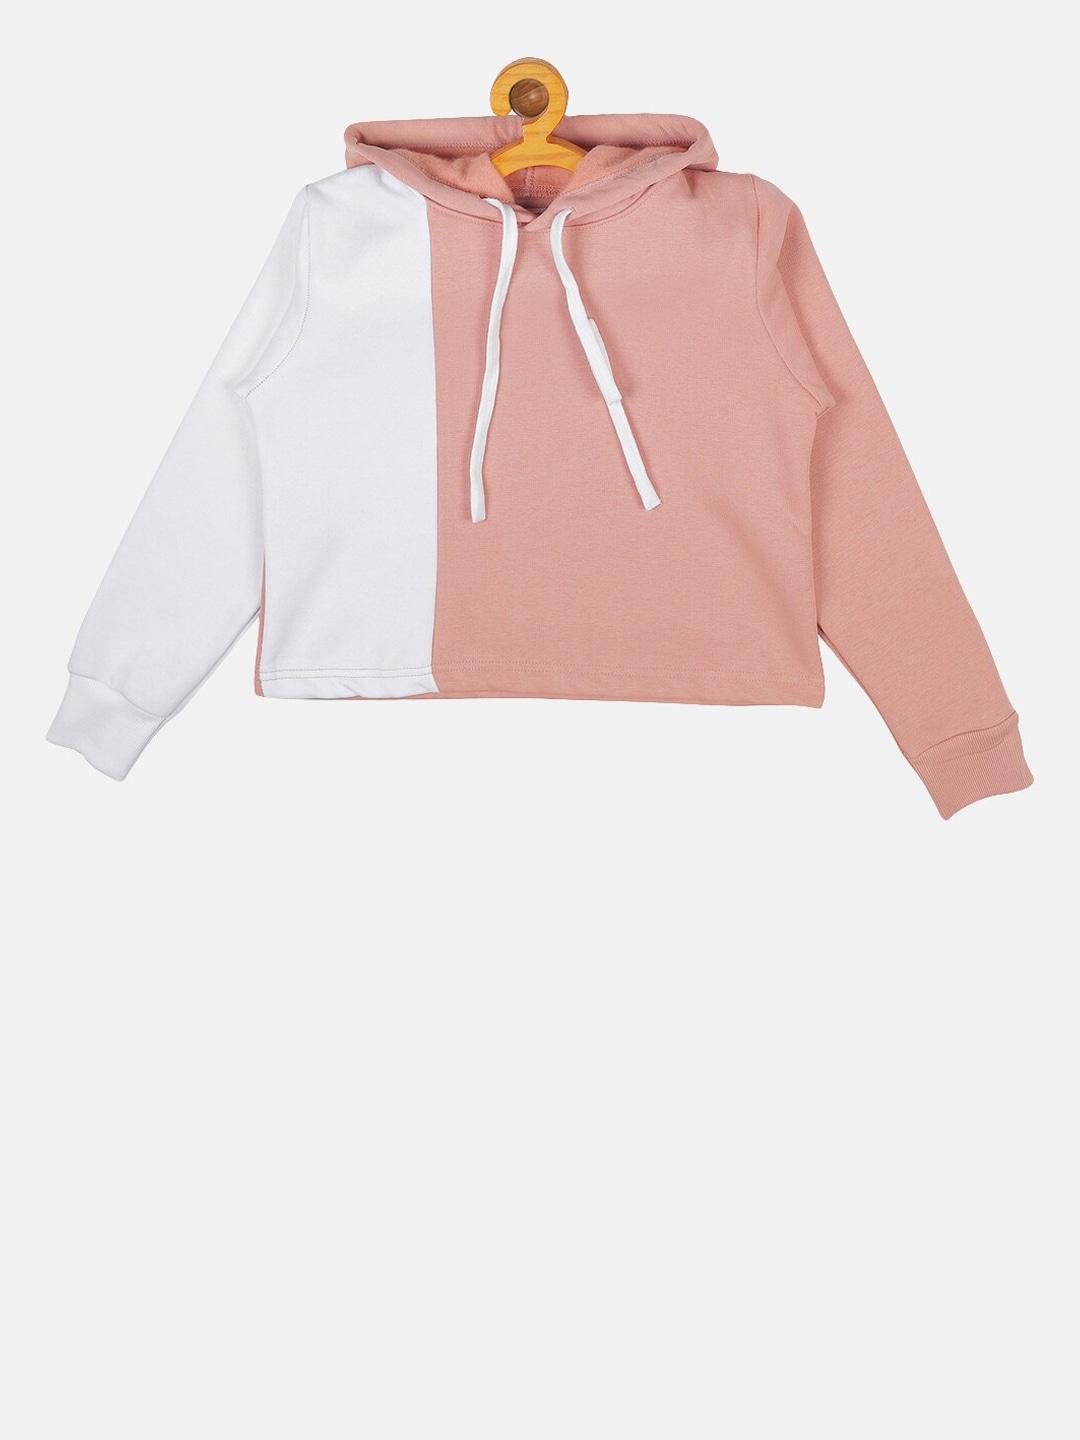 instafab boys pink & white solid hooded sweatshirt